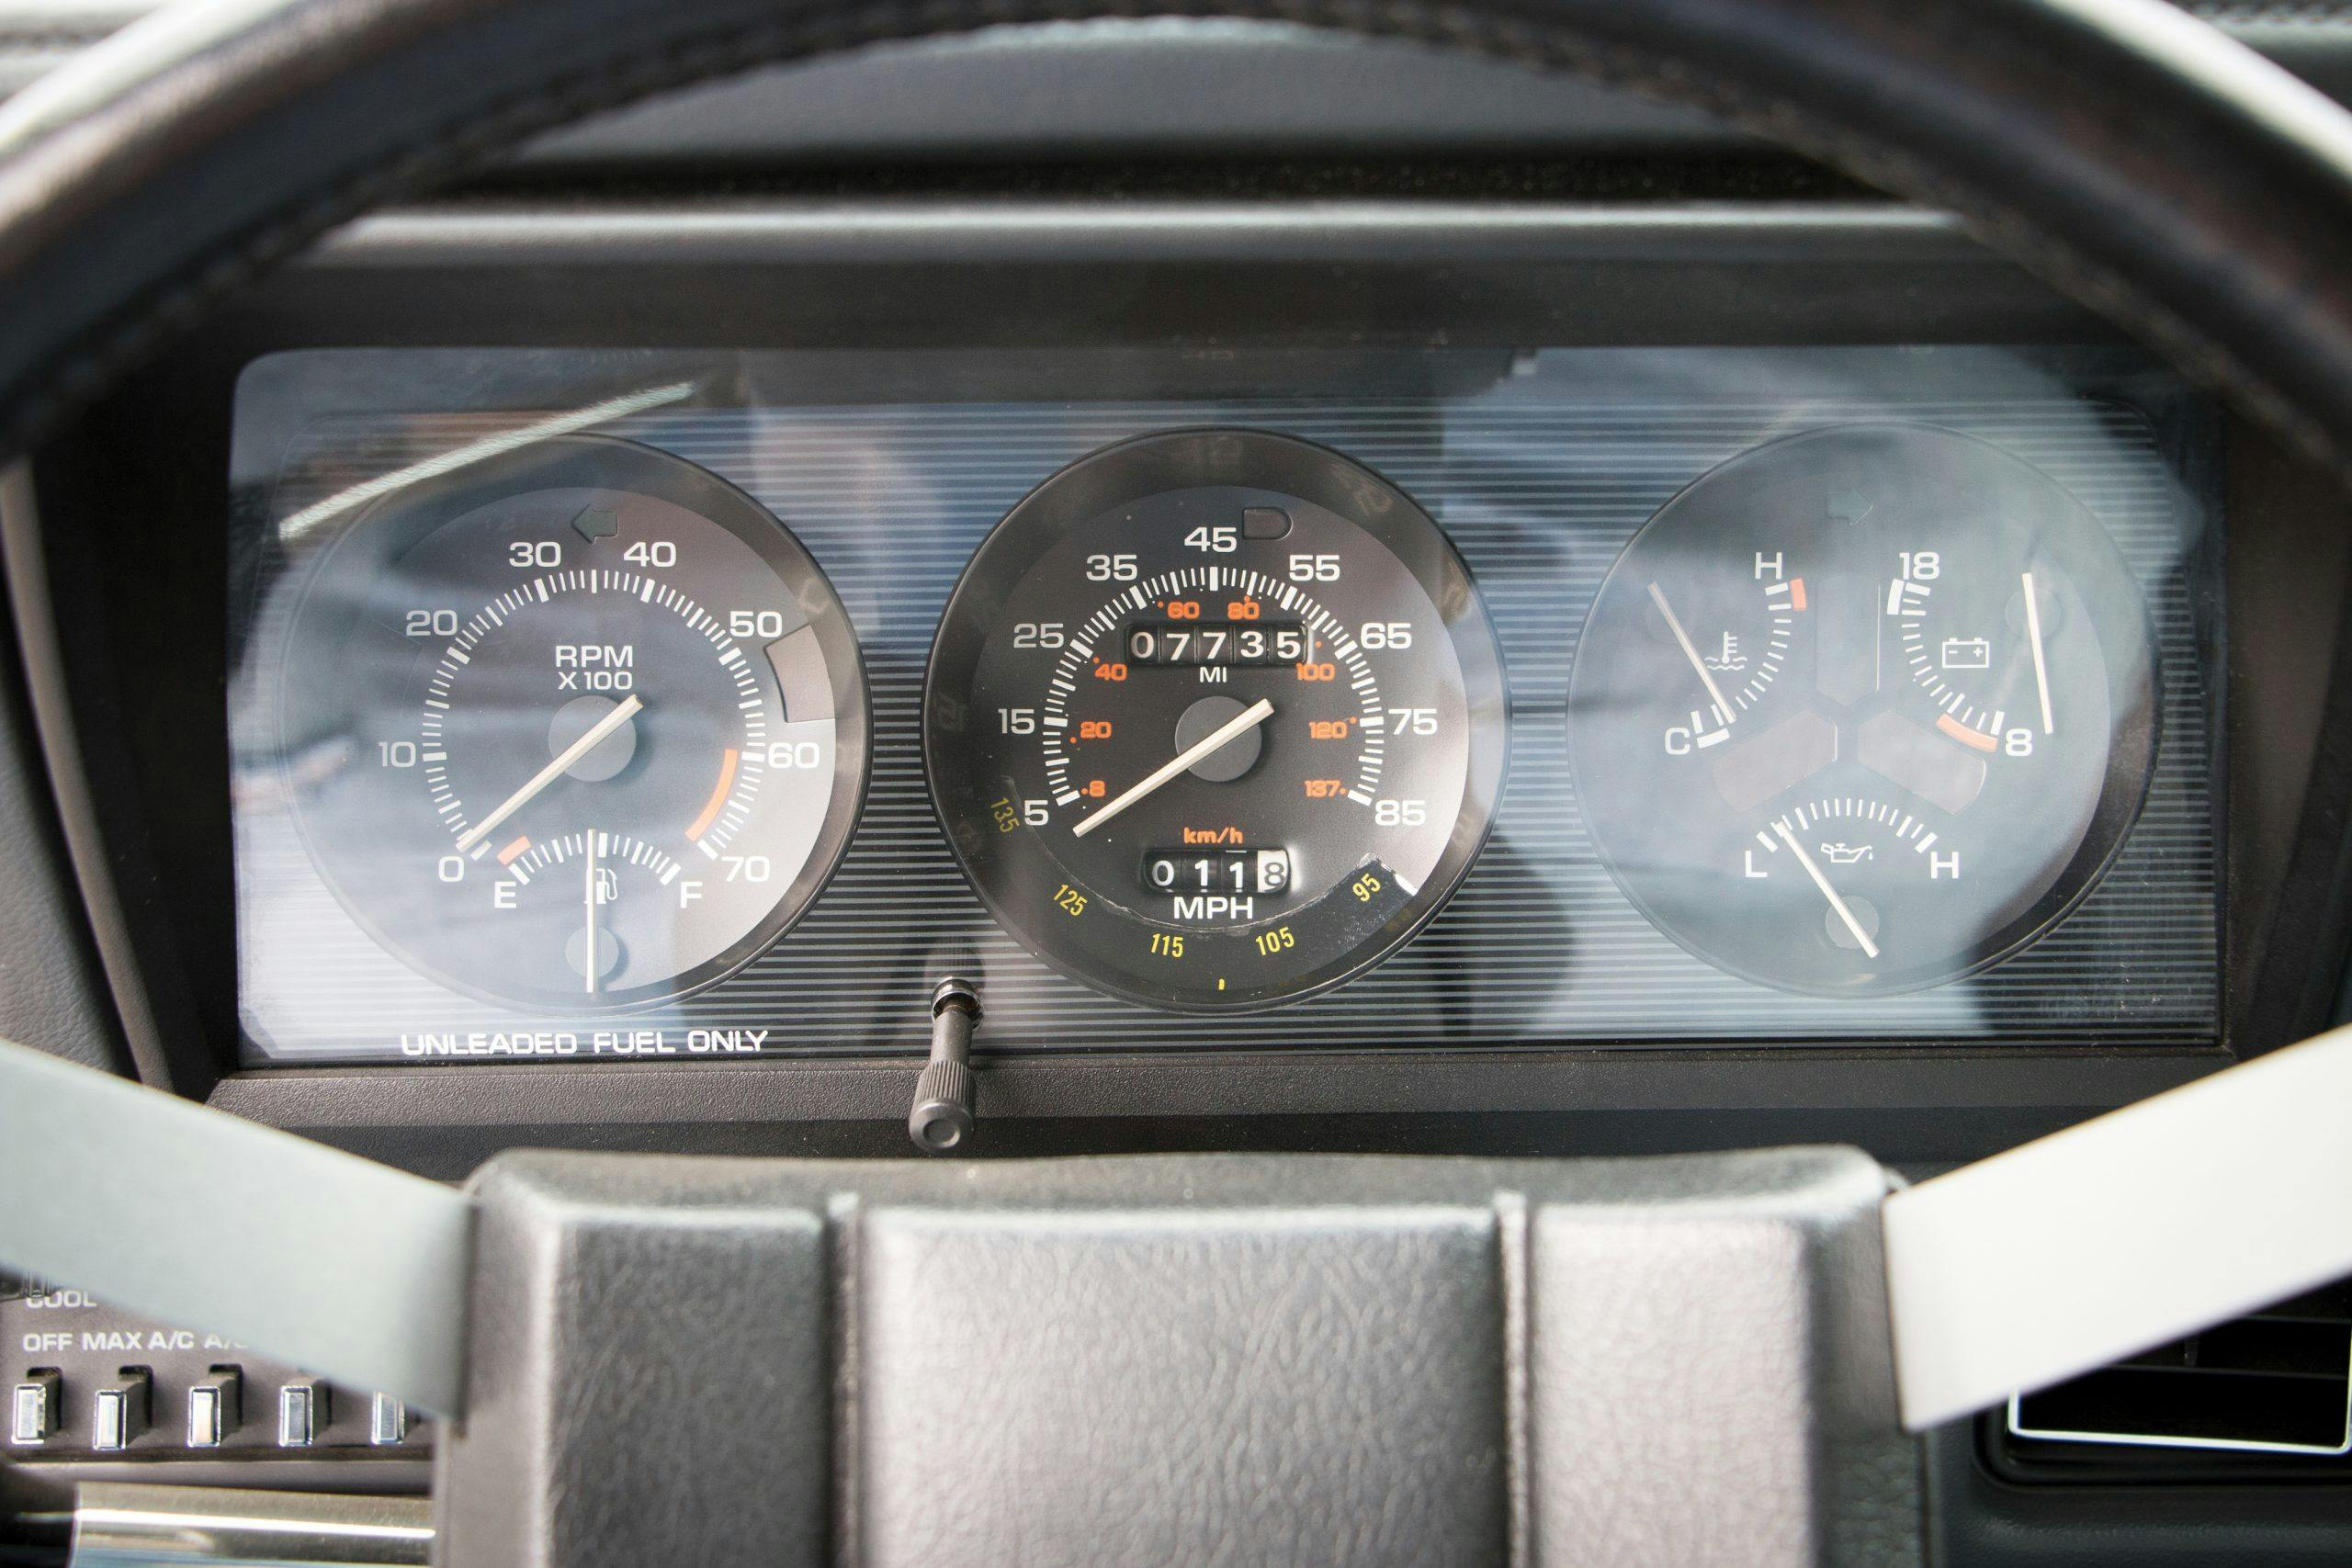 1986 Dodge Shelby Omni GLHS dash gauges